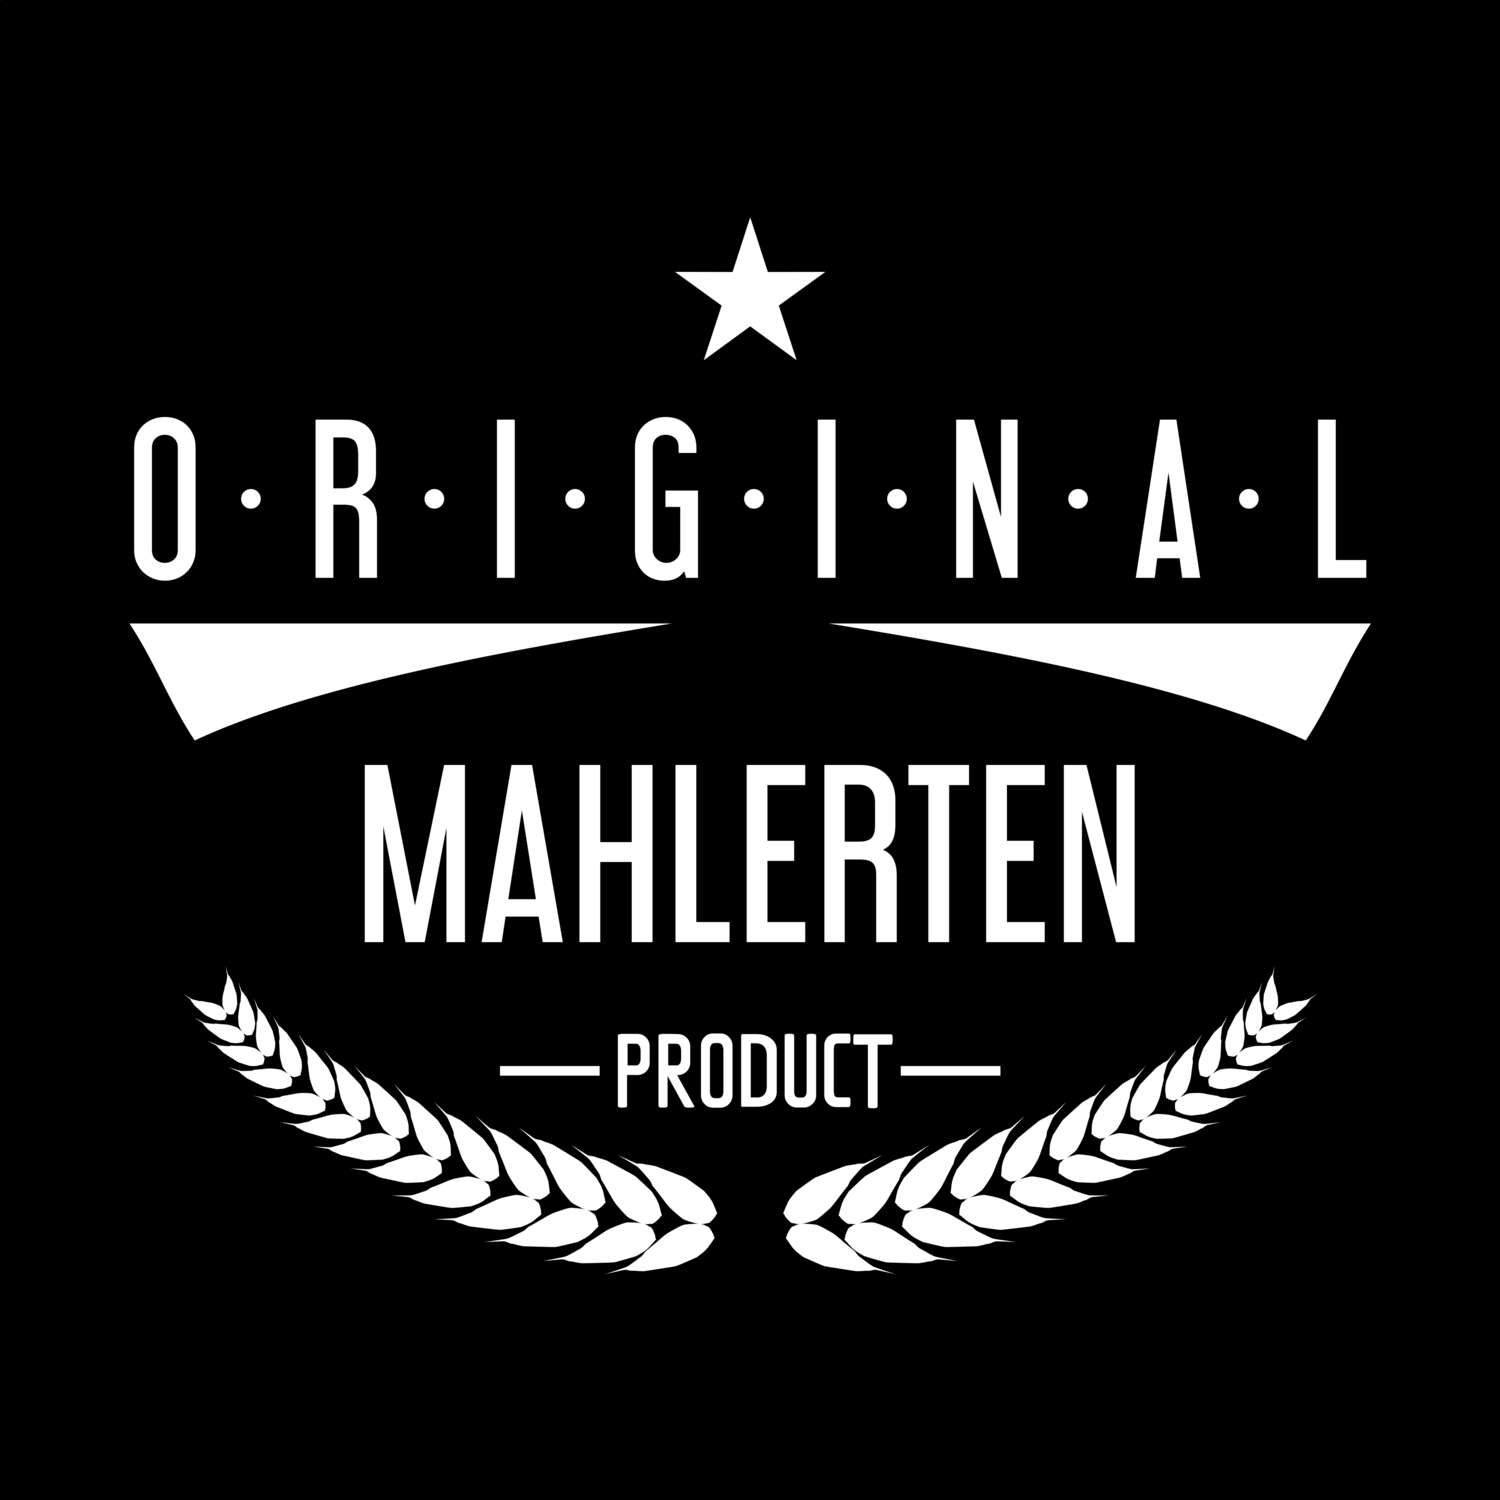 Mahlerten T-Shirt »Original Product«